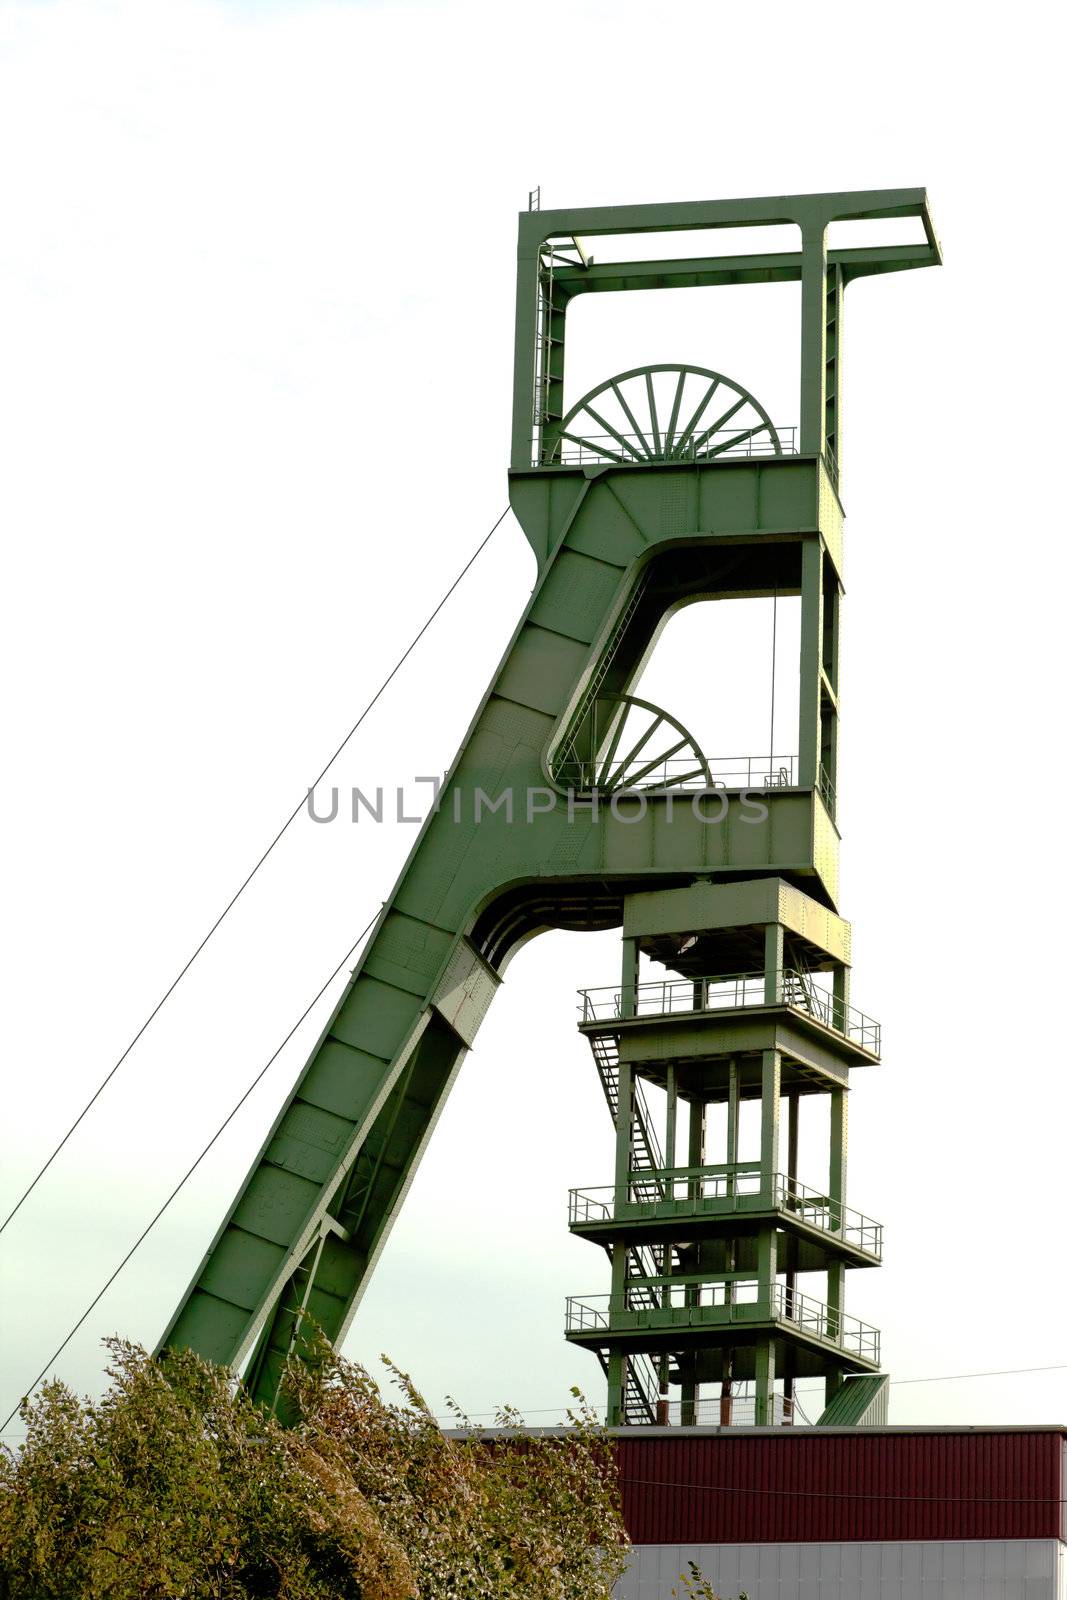 Headgear tower of underground coal mine shaft.